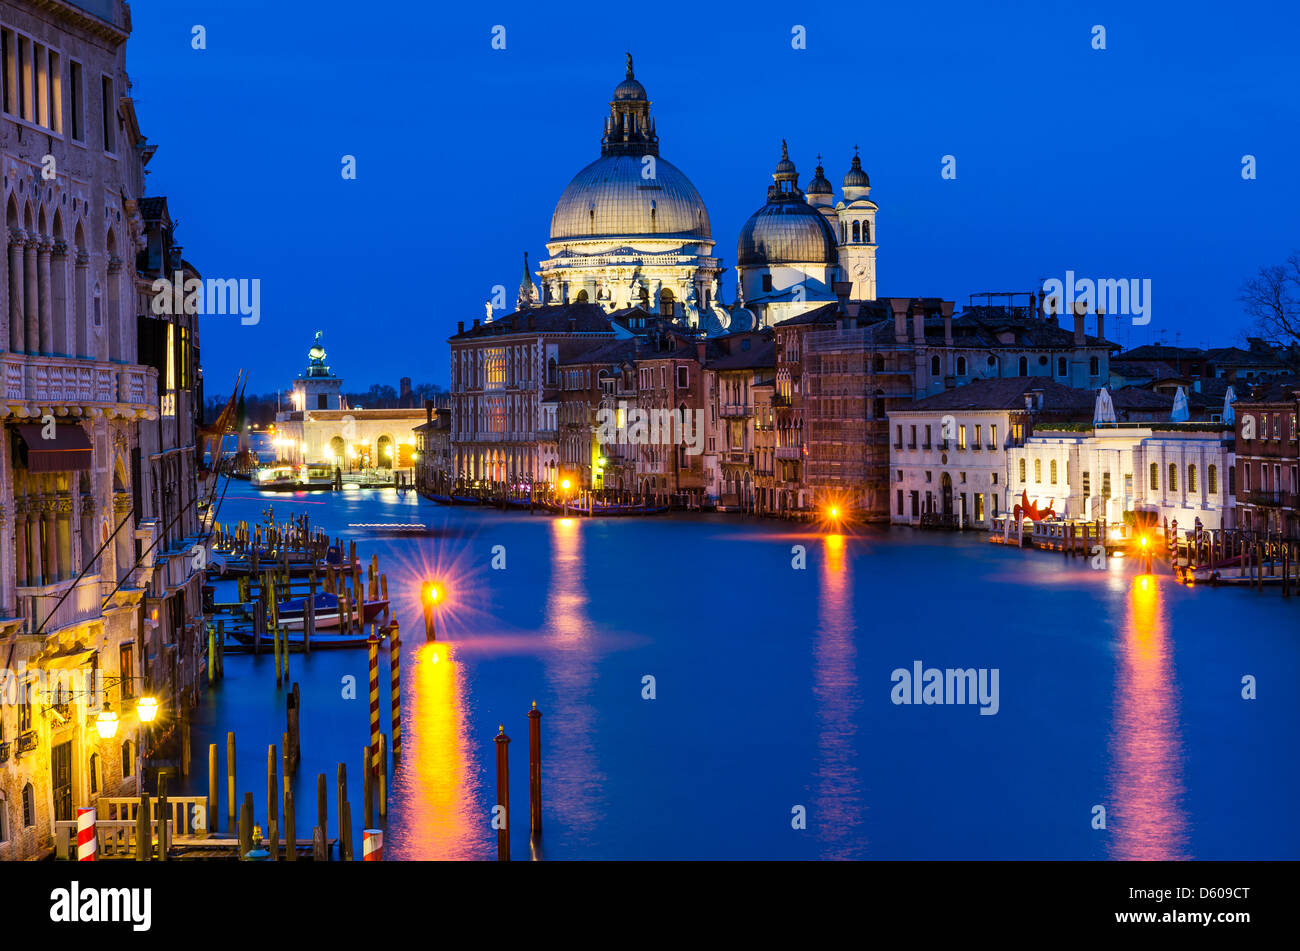 Twilight image of Grand Canal in Venice, with Santa Maria della Salute church. Italy landmark. Stock Photo